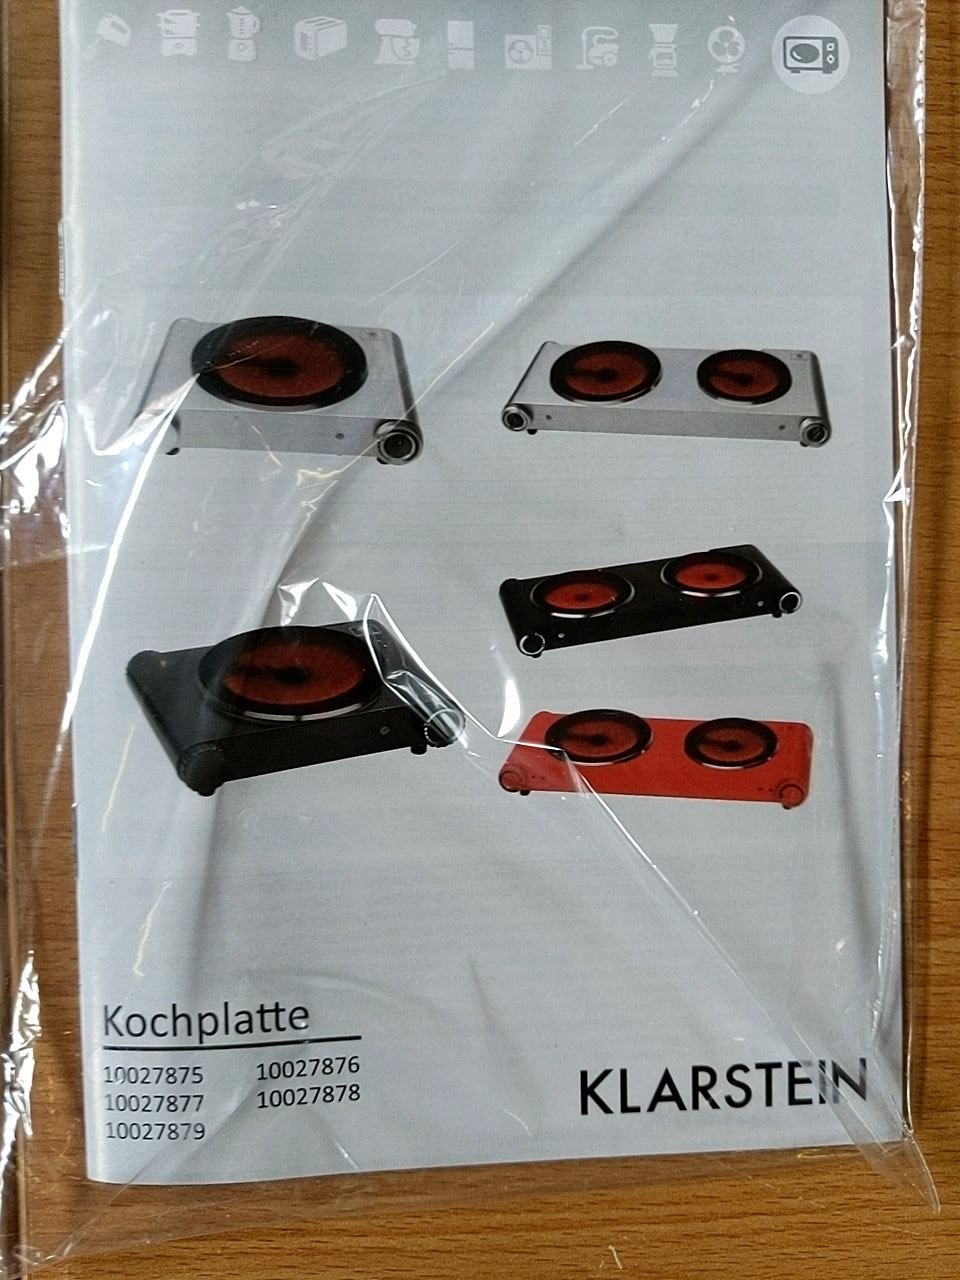 Dvouplotýnkový vařič Klarstein 10027877